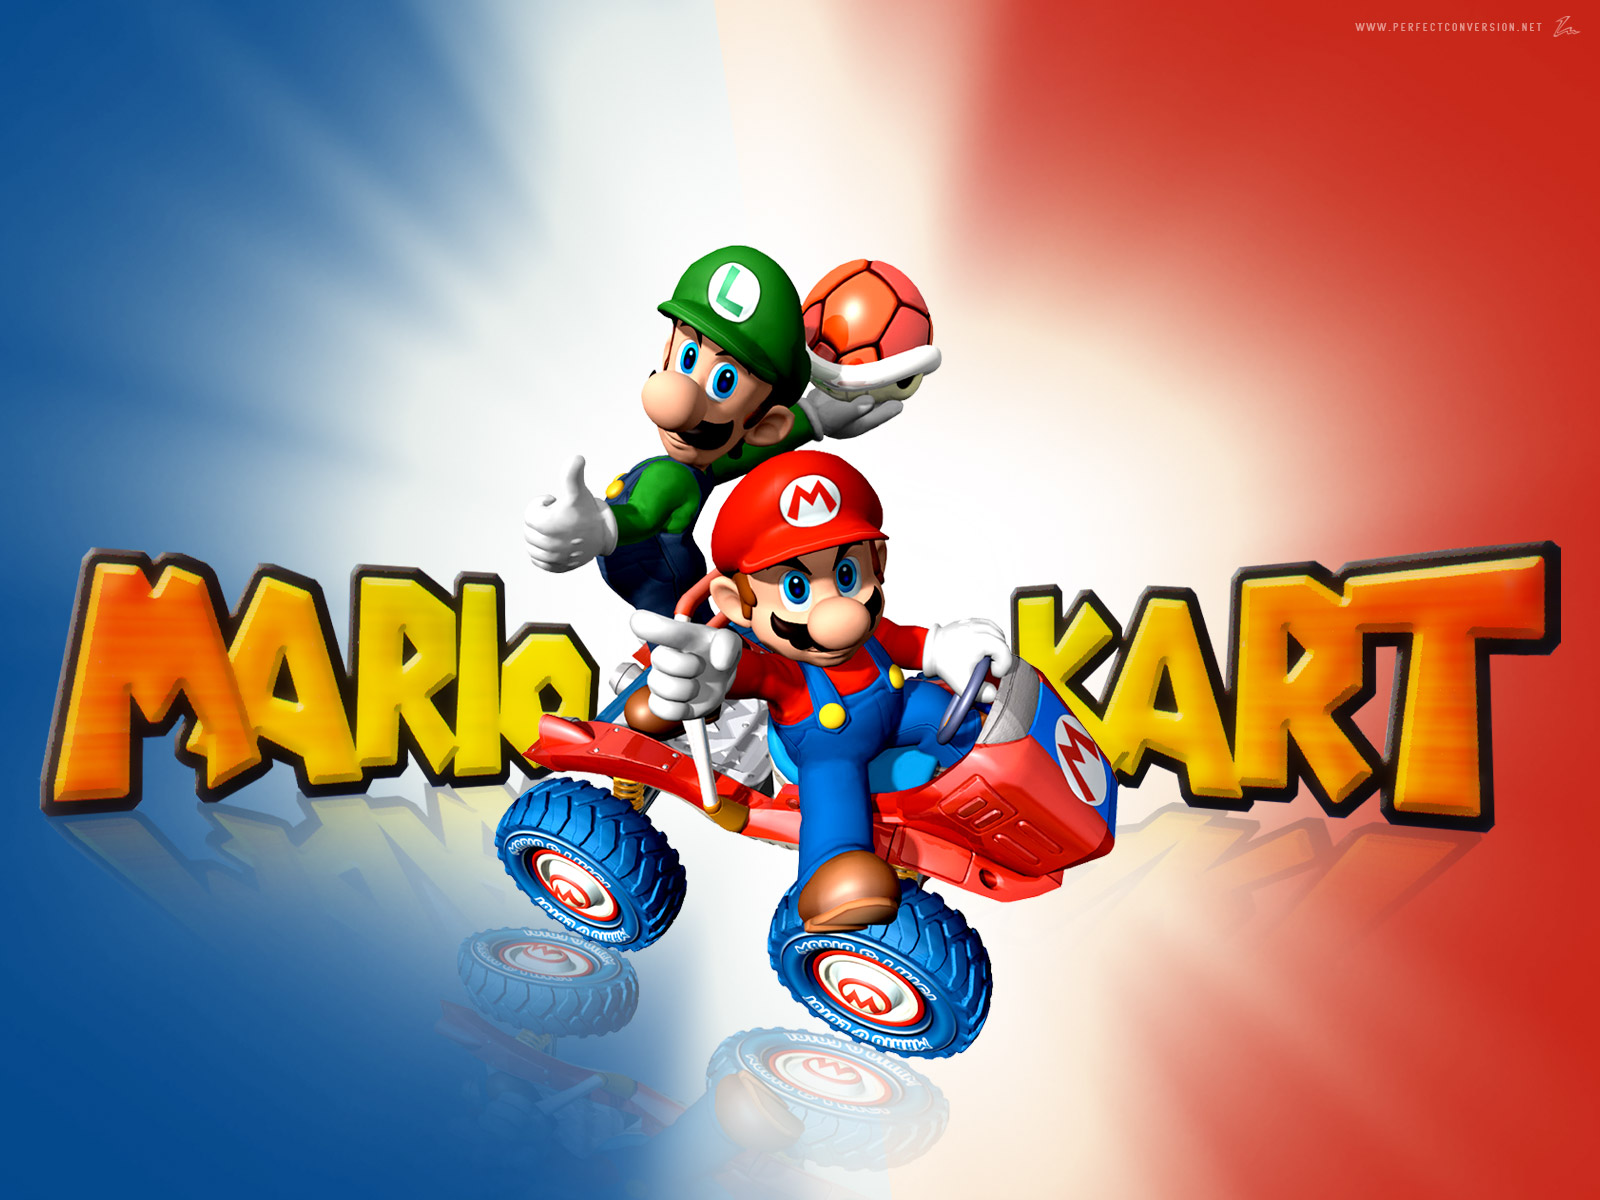 Mario Kart Flash PC a mario kart fanmade game in